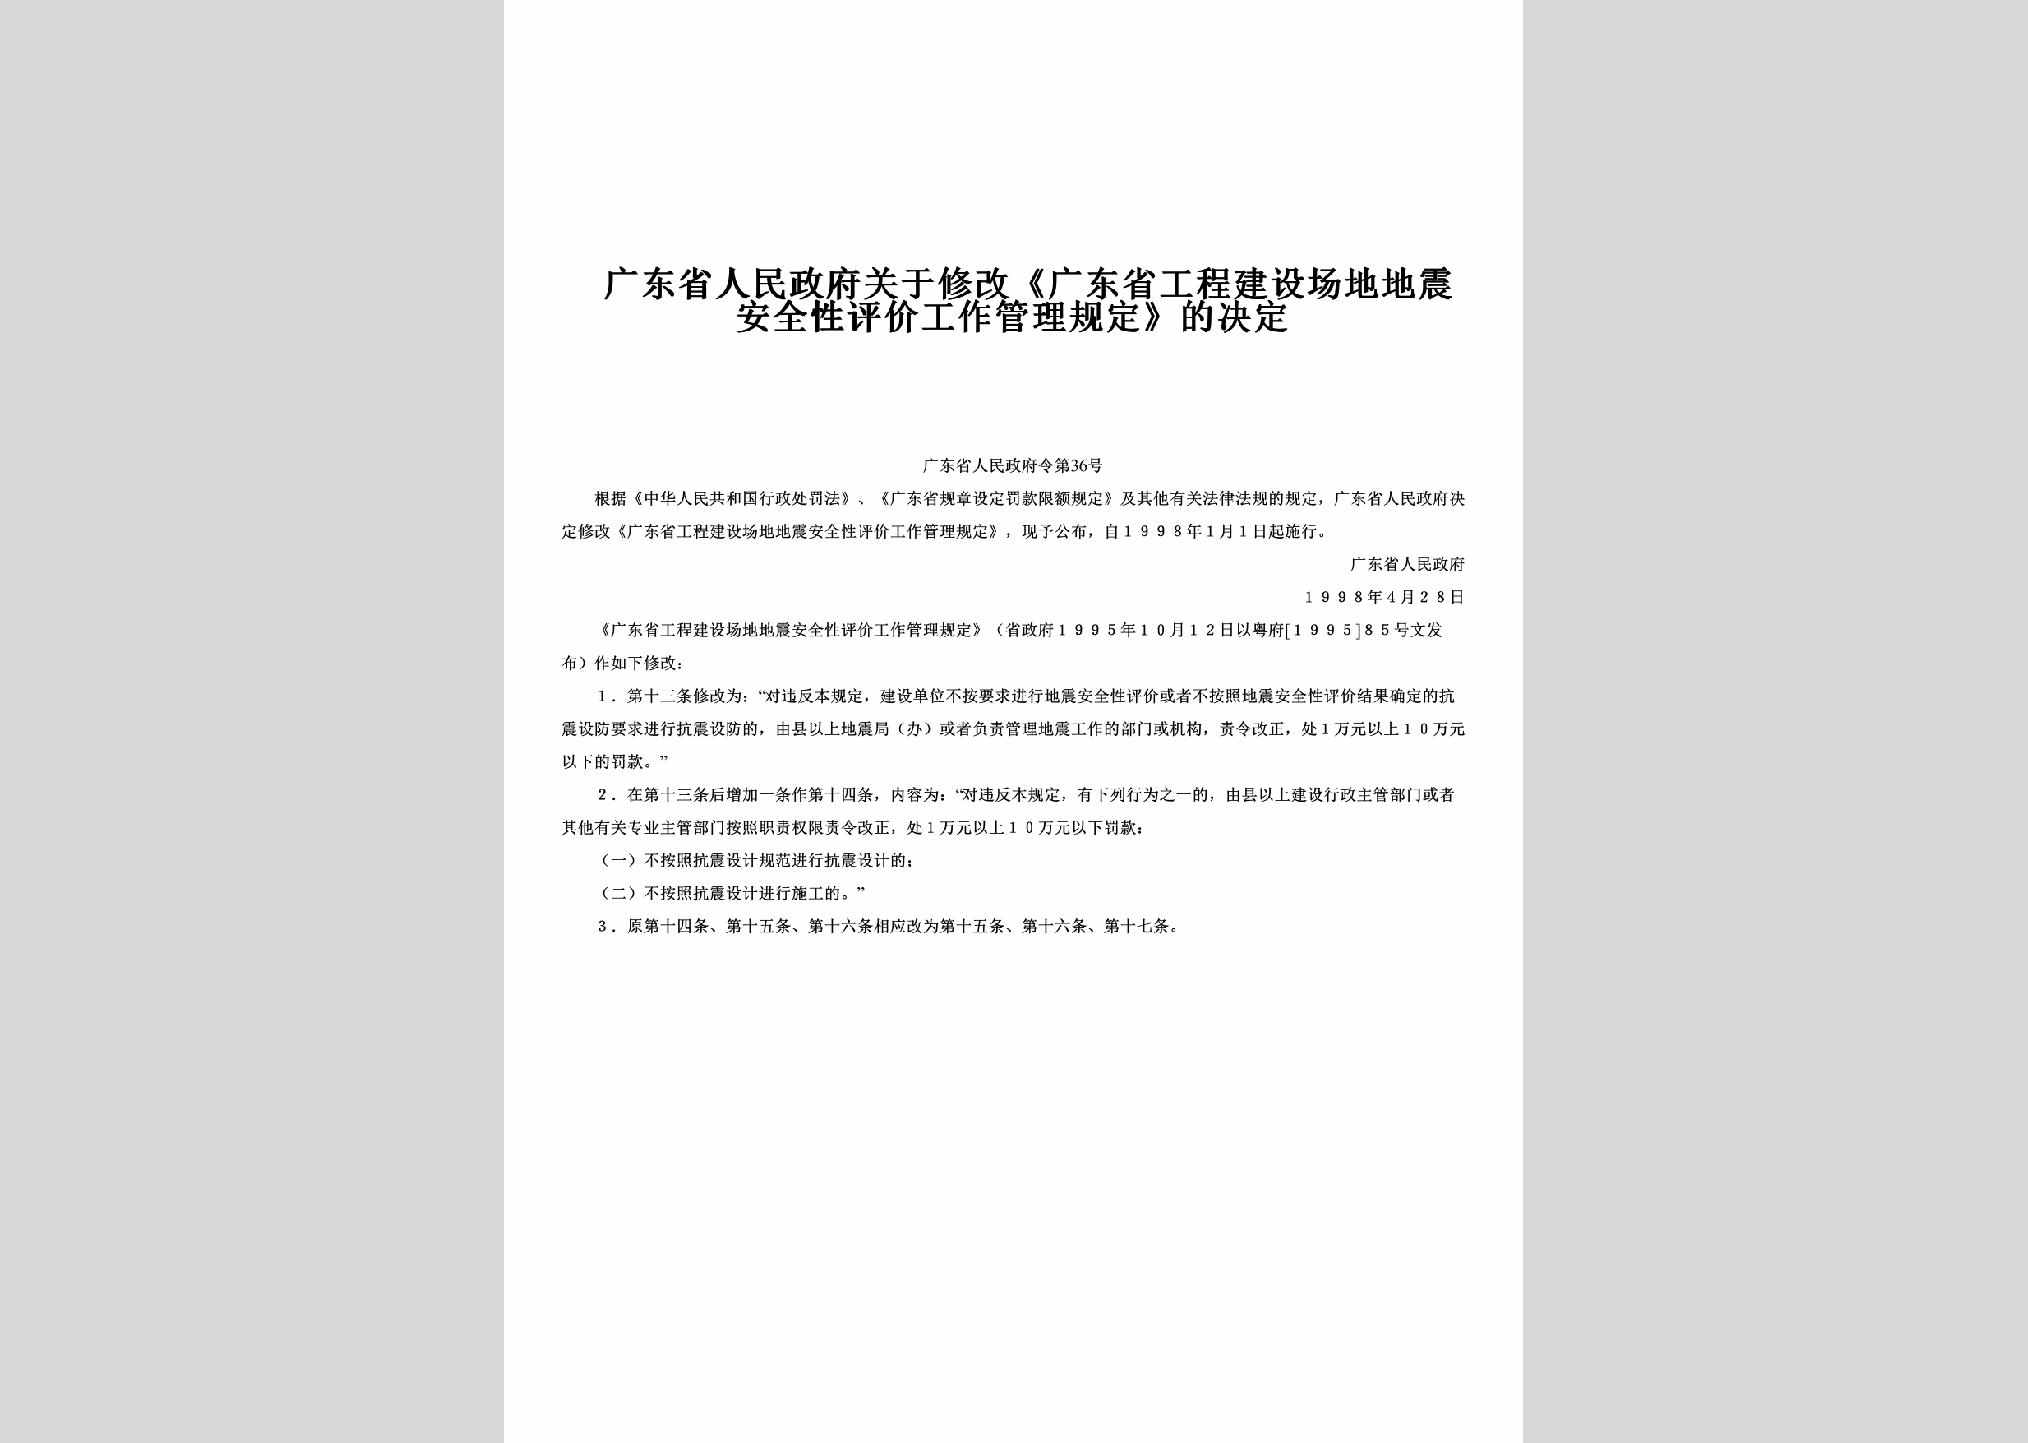 GDSRMZFL-1998-36：关于修改《广东省工程建设场地地震安全性评价工作管理规定》的决定